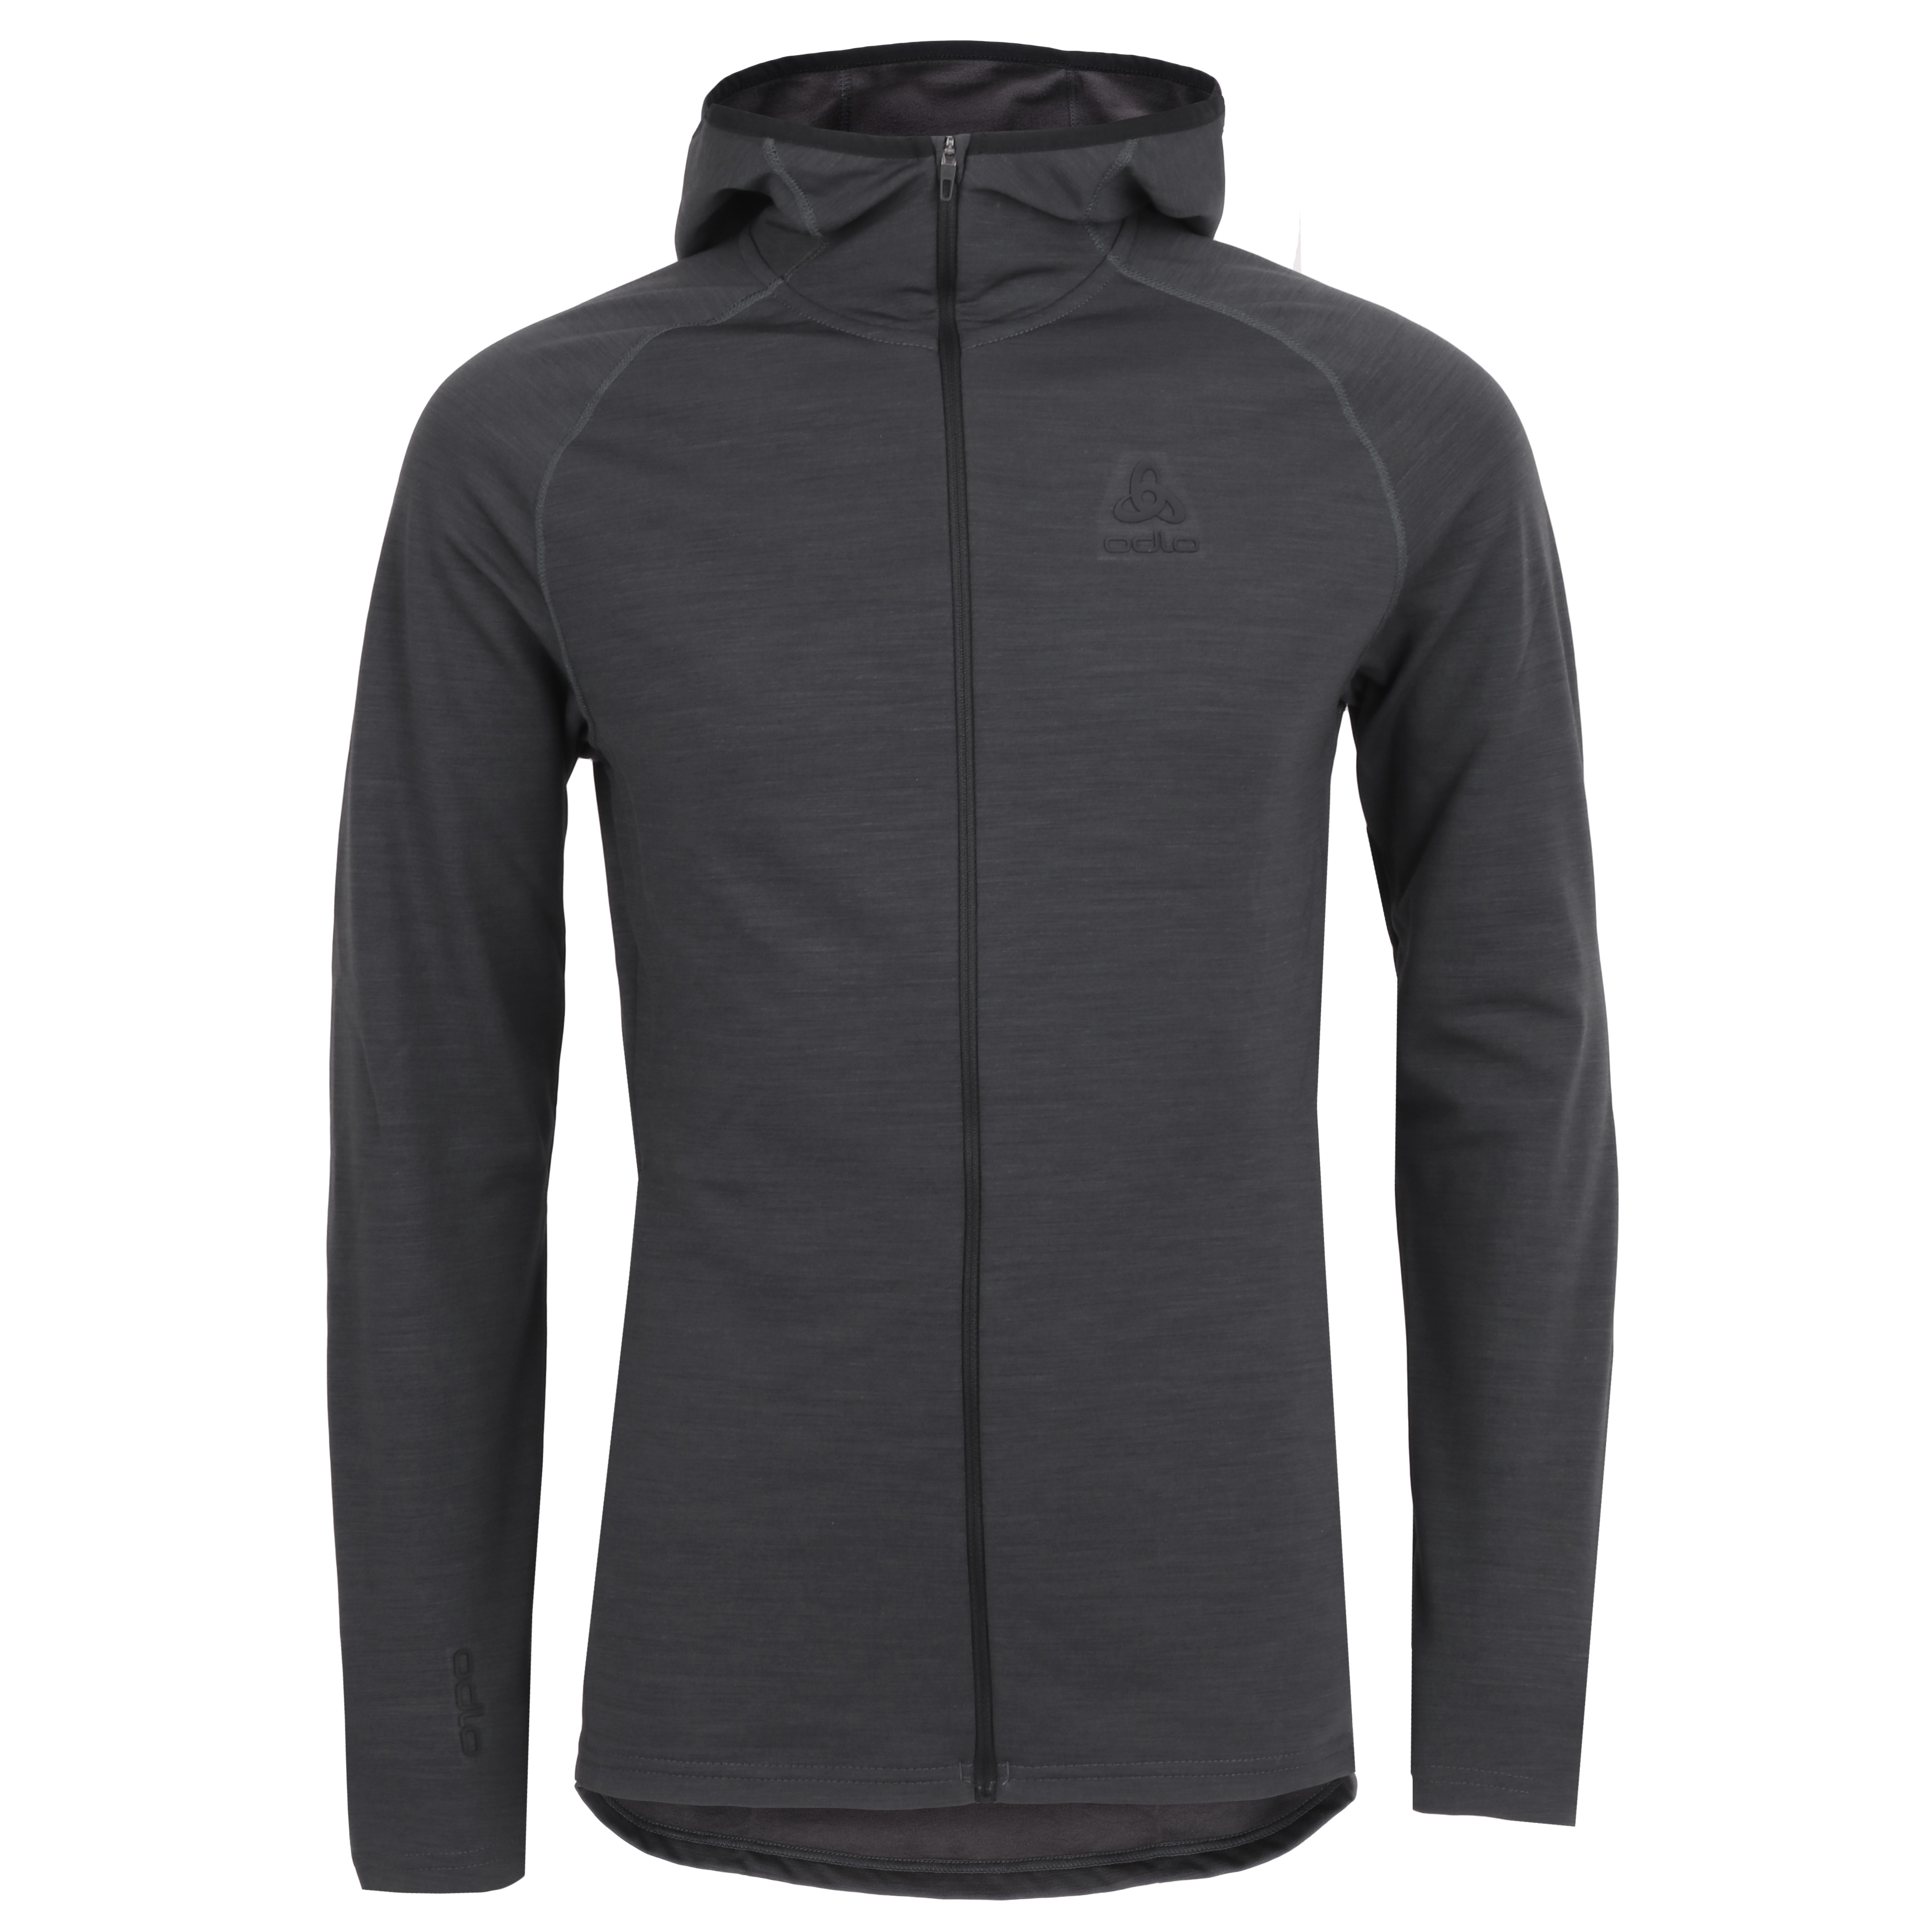 Image of Odlo Ascent Performance Wool Warm Hooded Mid Layer Jacket Men - odlo graphite grey